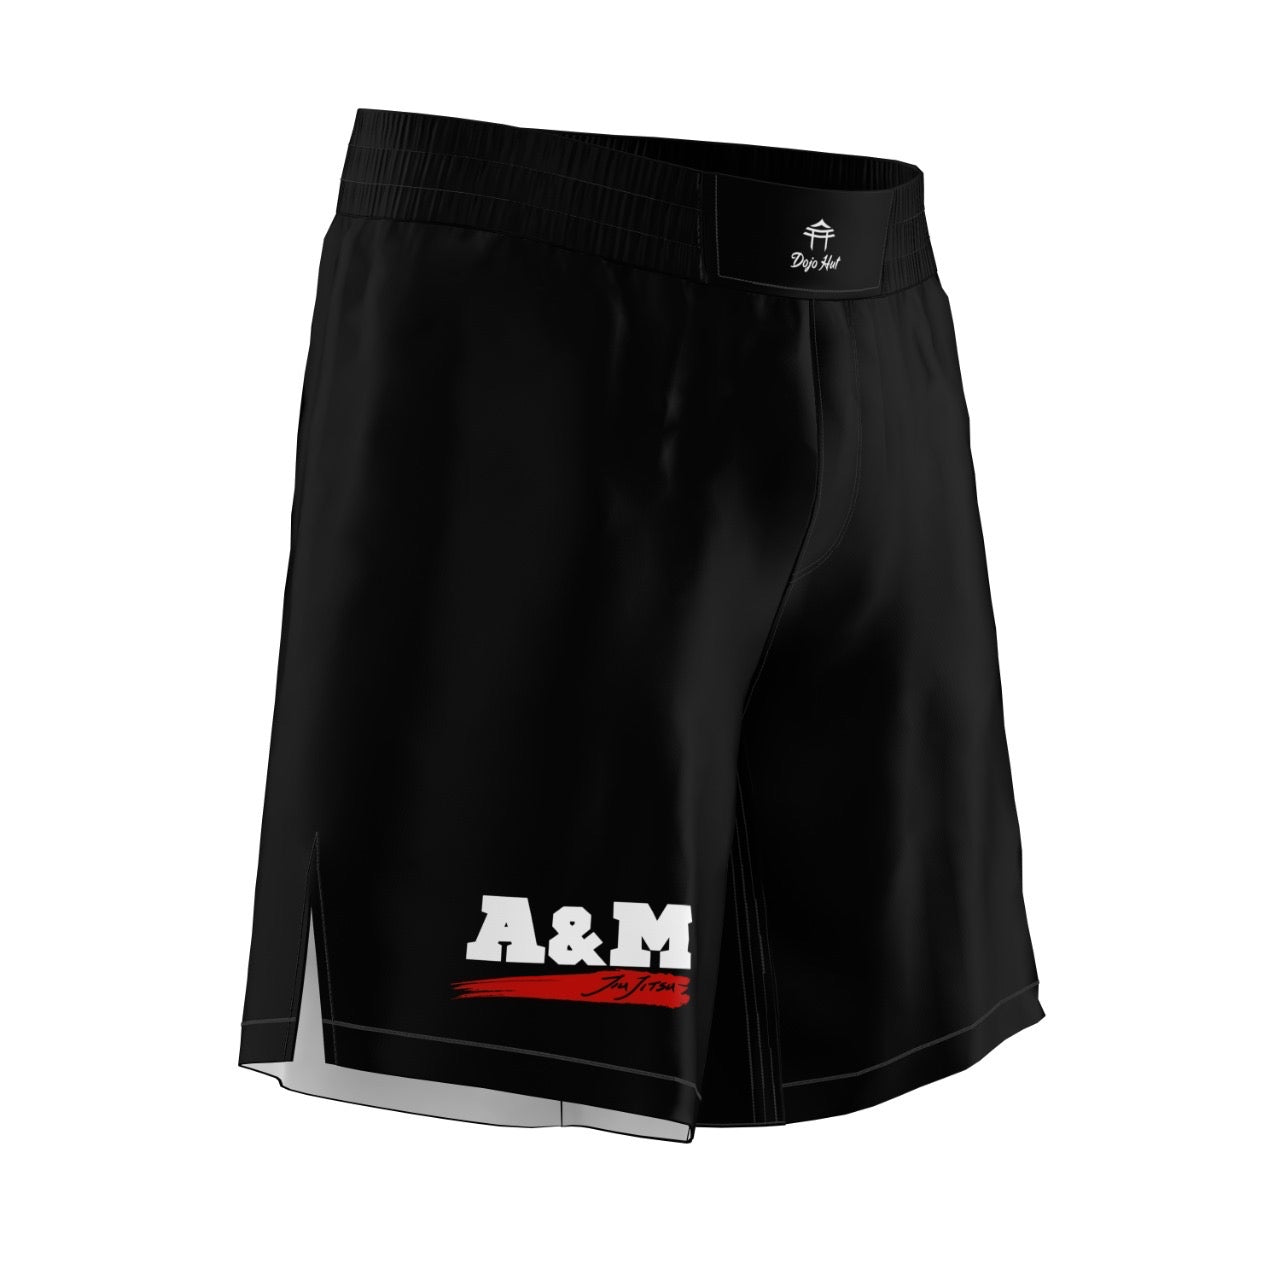 “A&M” Black MMA Shorts